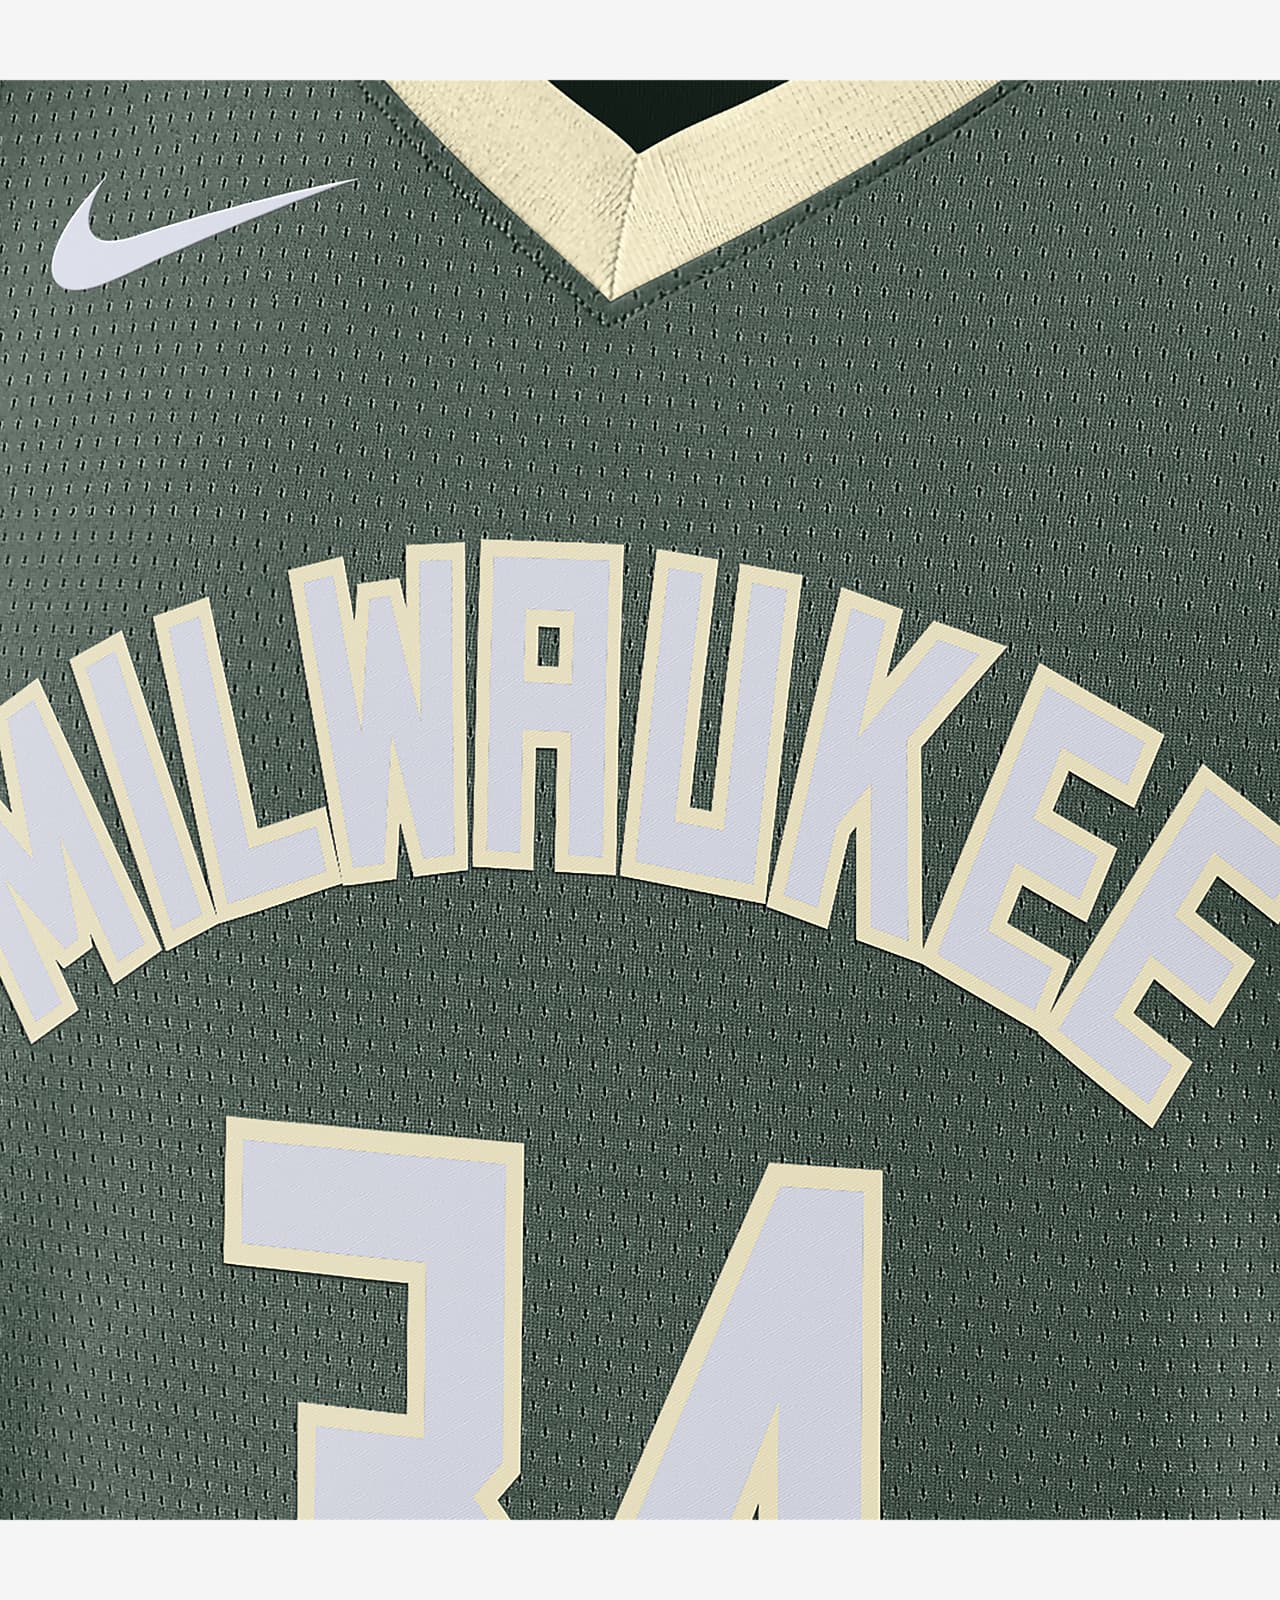 New Nike NBA Jersey Sizing: Swingman and Authentic 